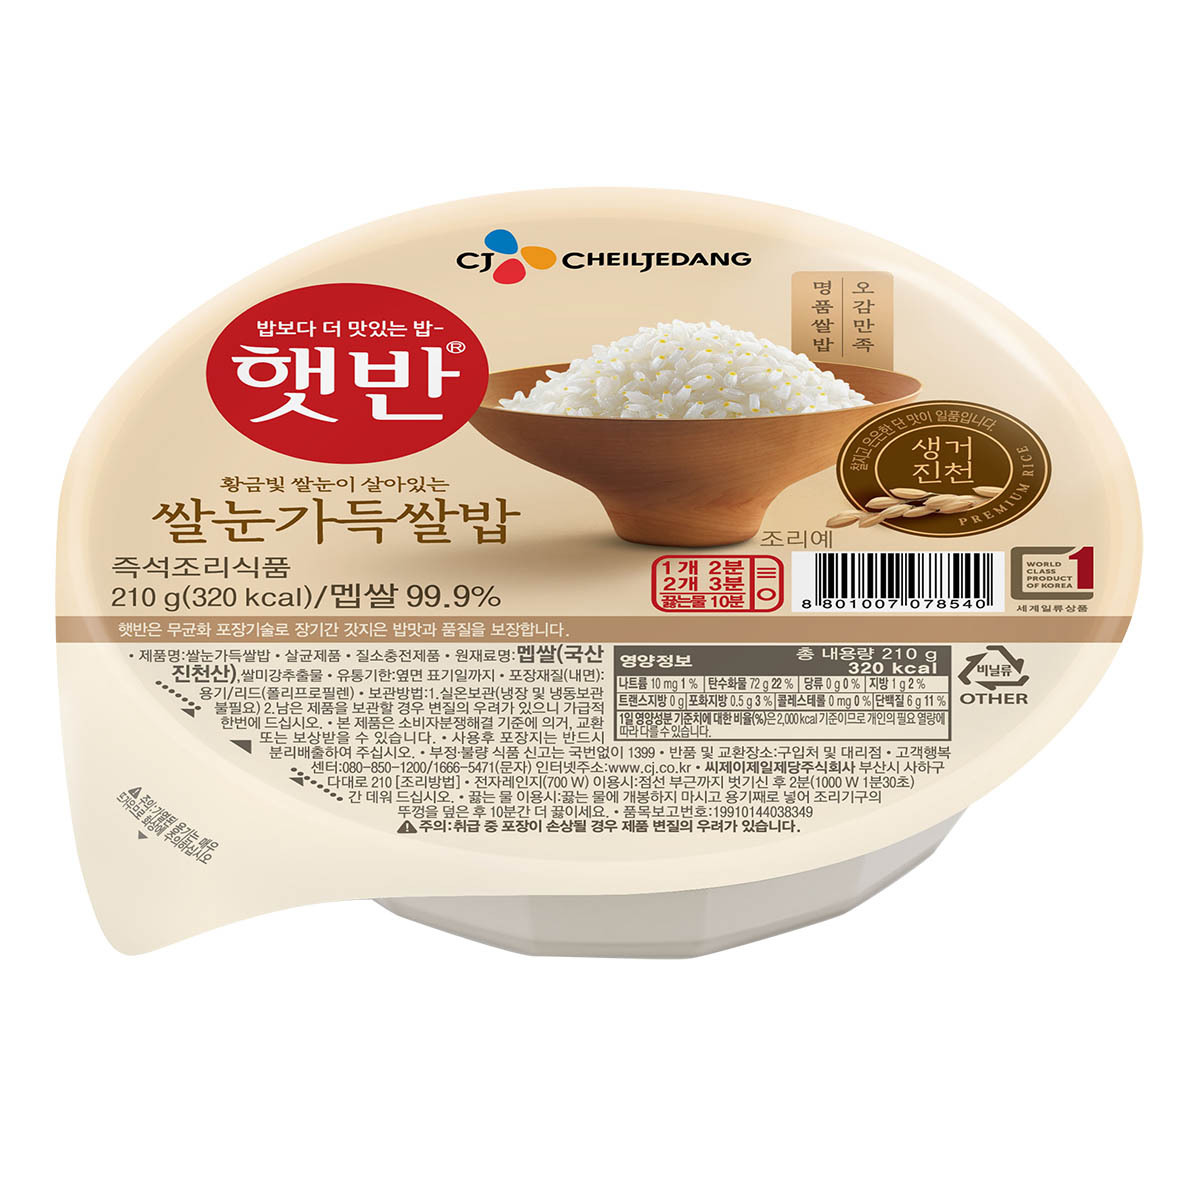 CJ 햇반 쌀눈가득쌀밥 210g x 18